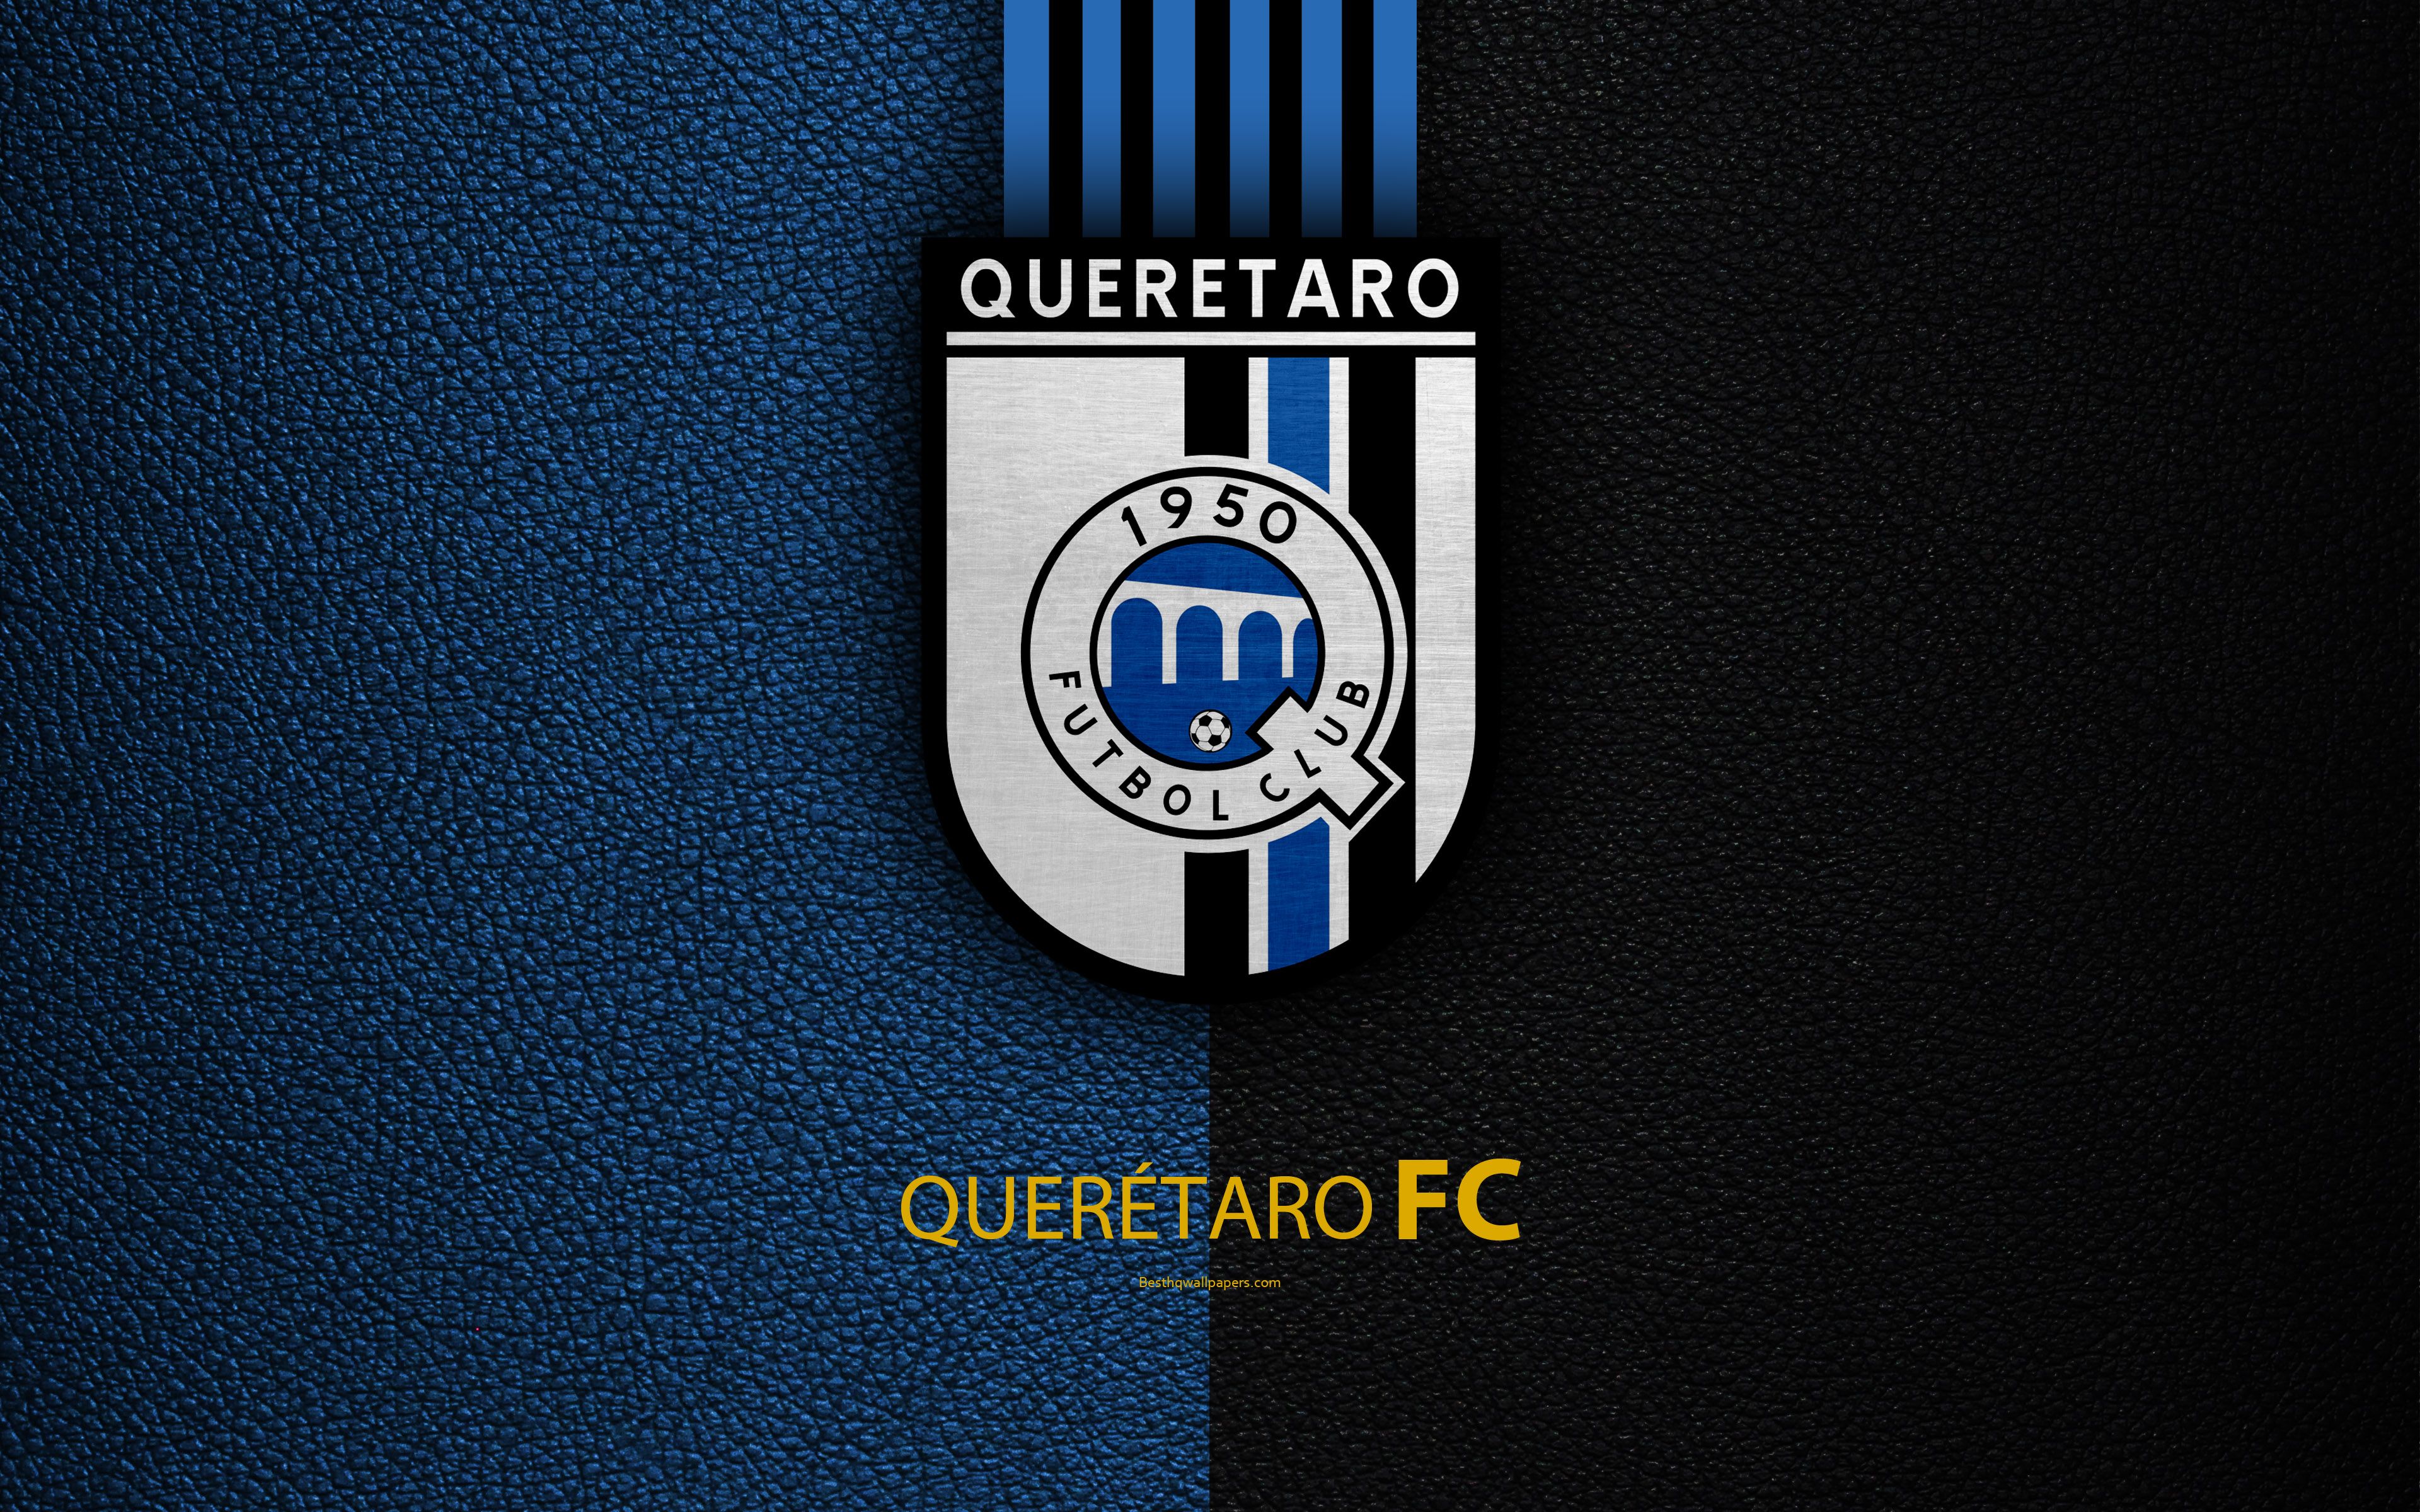 Download wallpaper Queretaro FC, ESPN FC, Gallos Blancos de